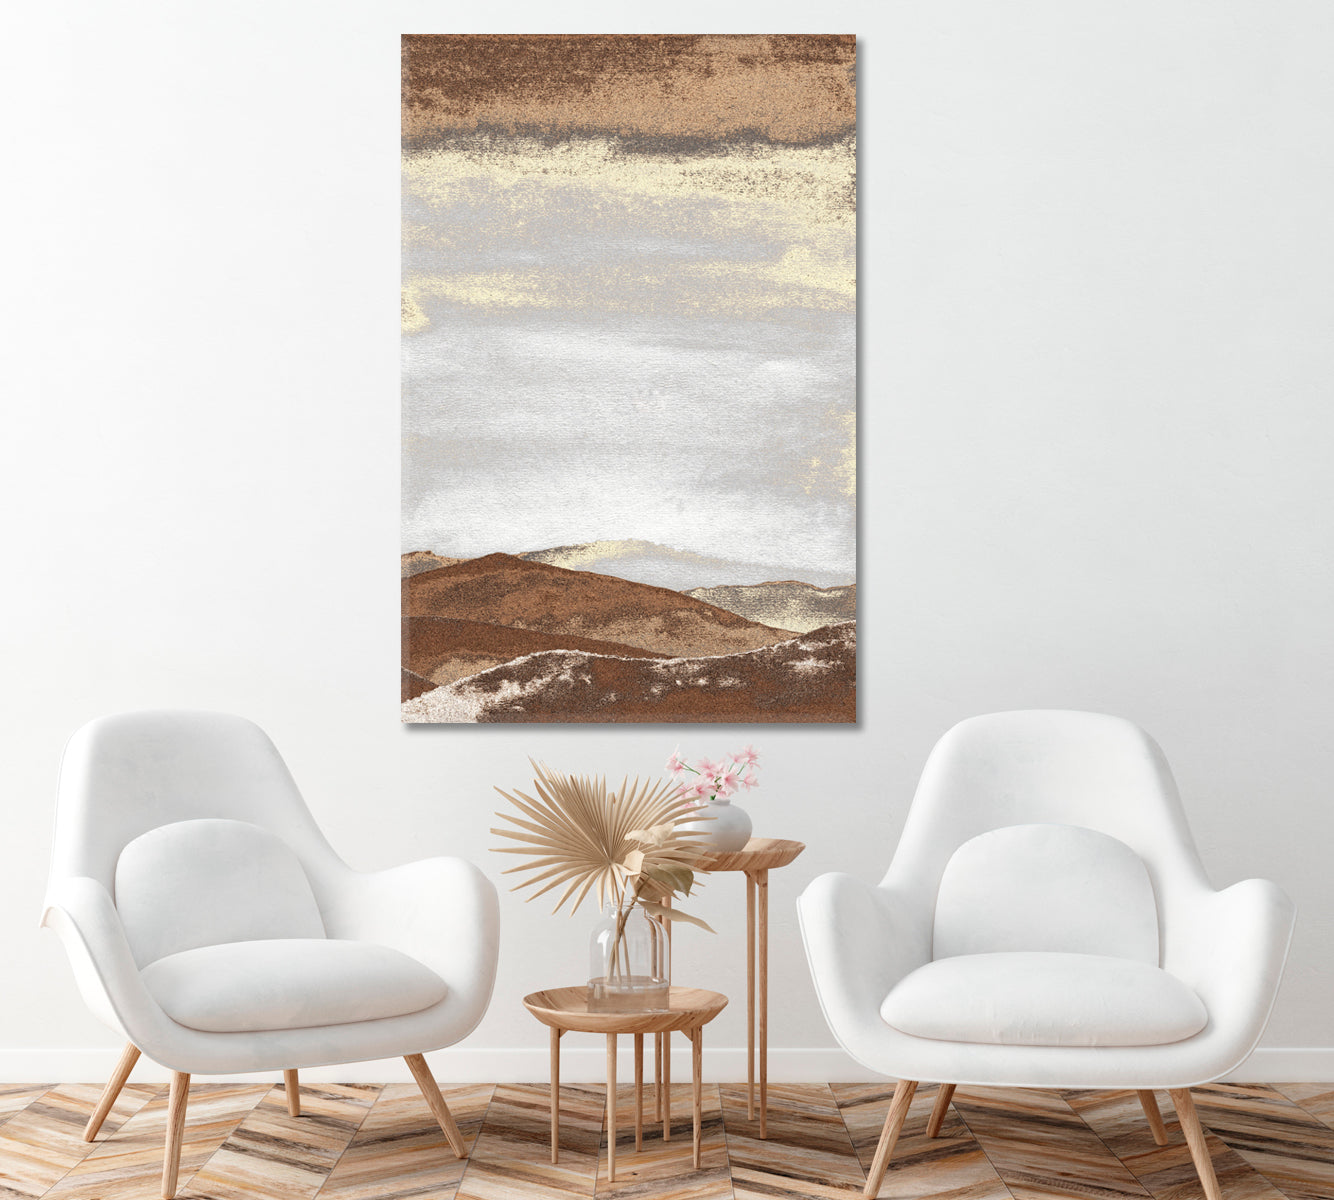 Mountain Sunrise Landscape Canvas Print ArtLexy   